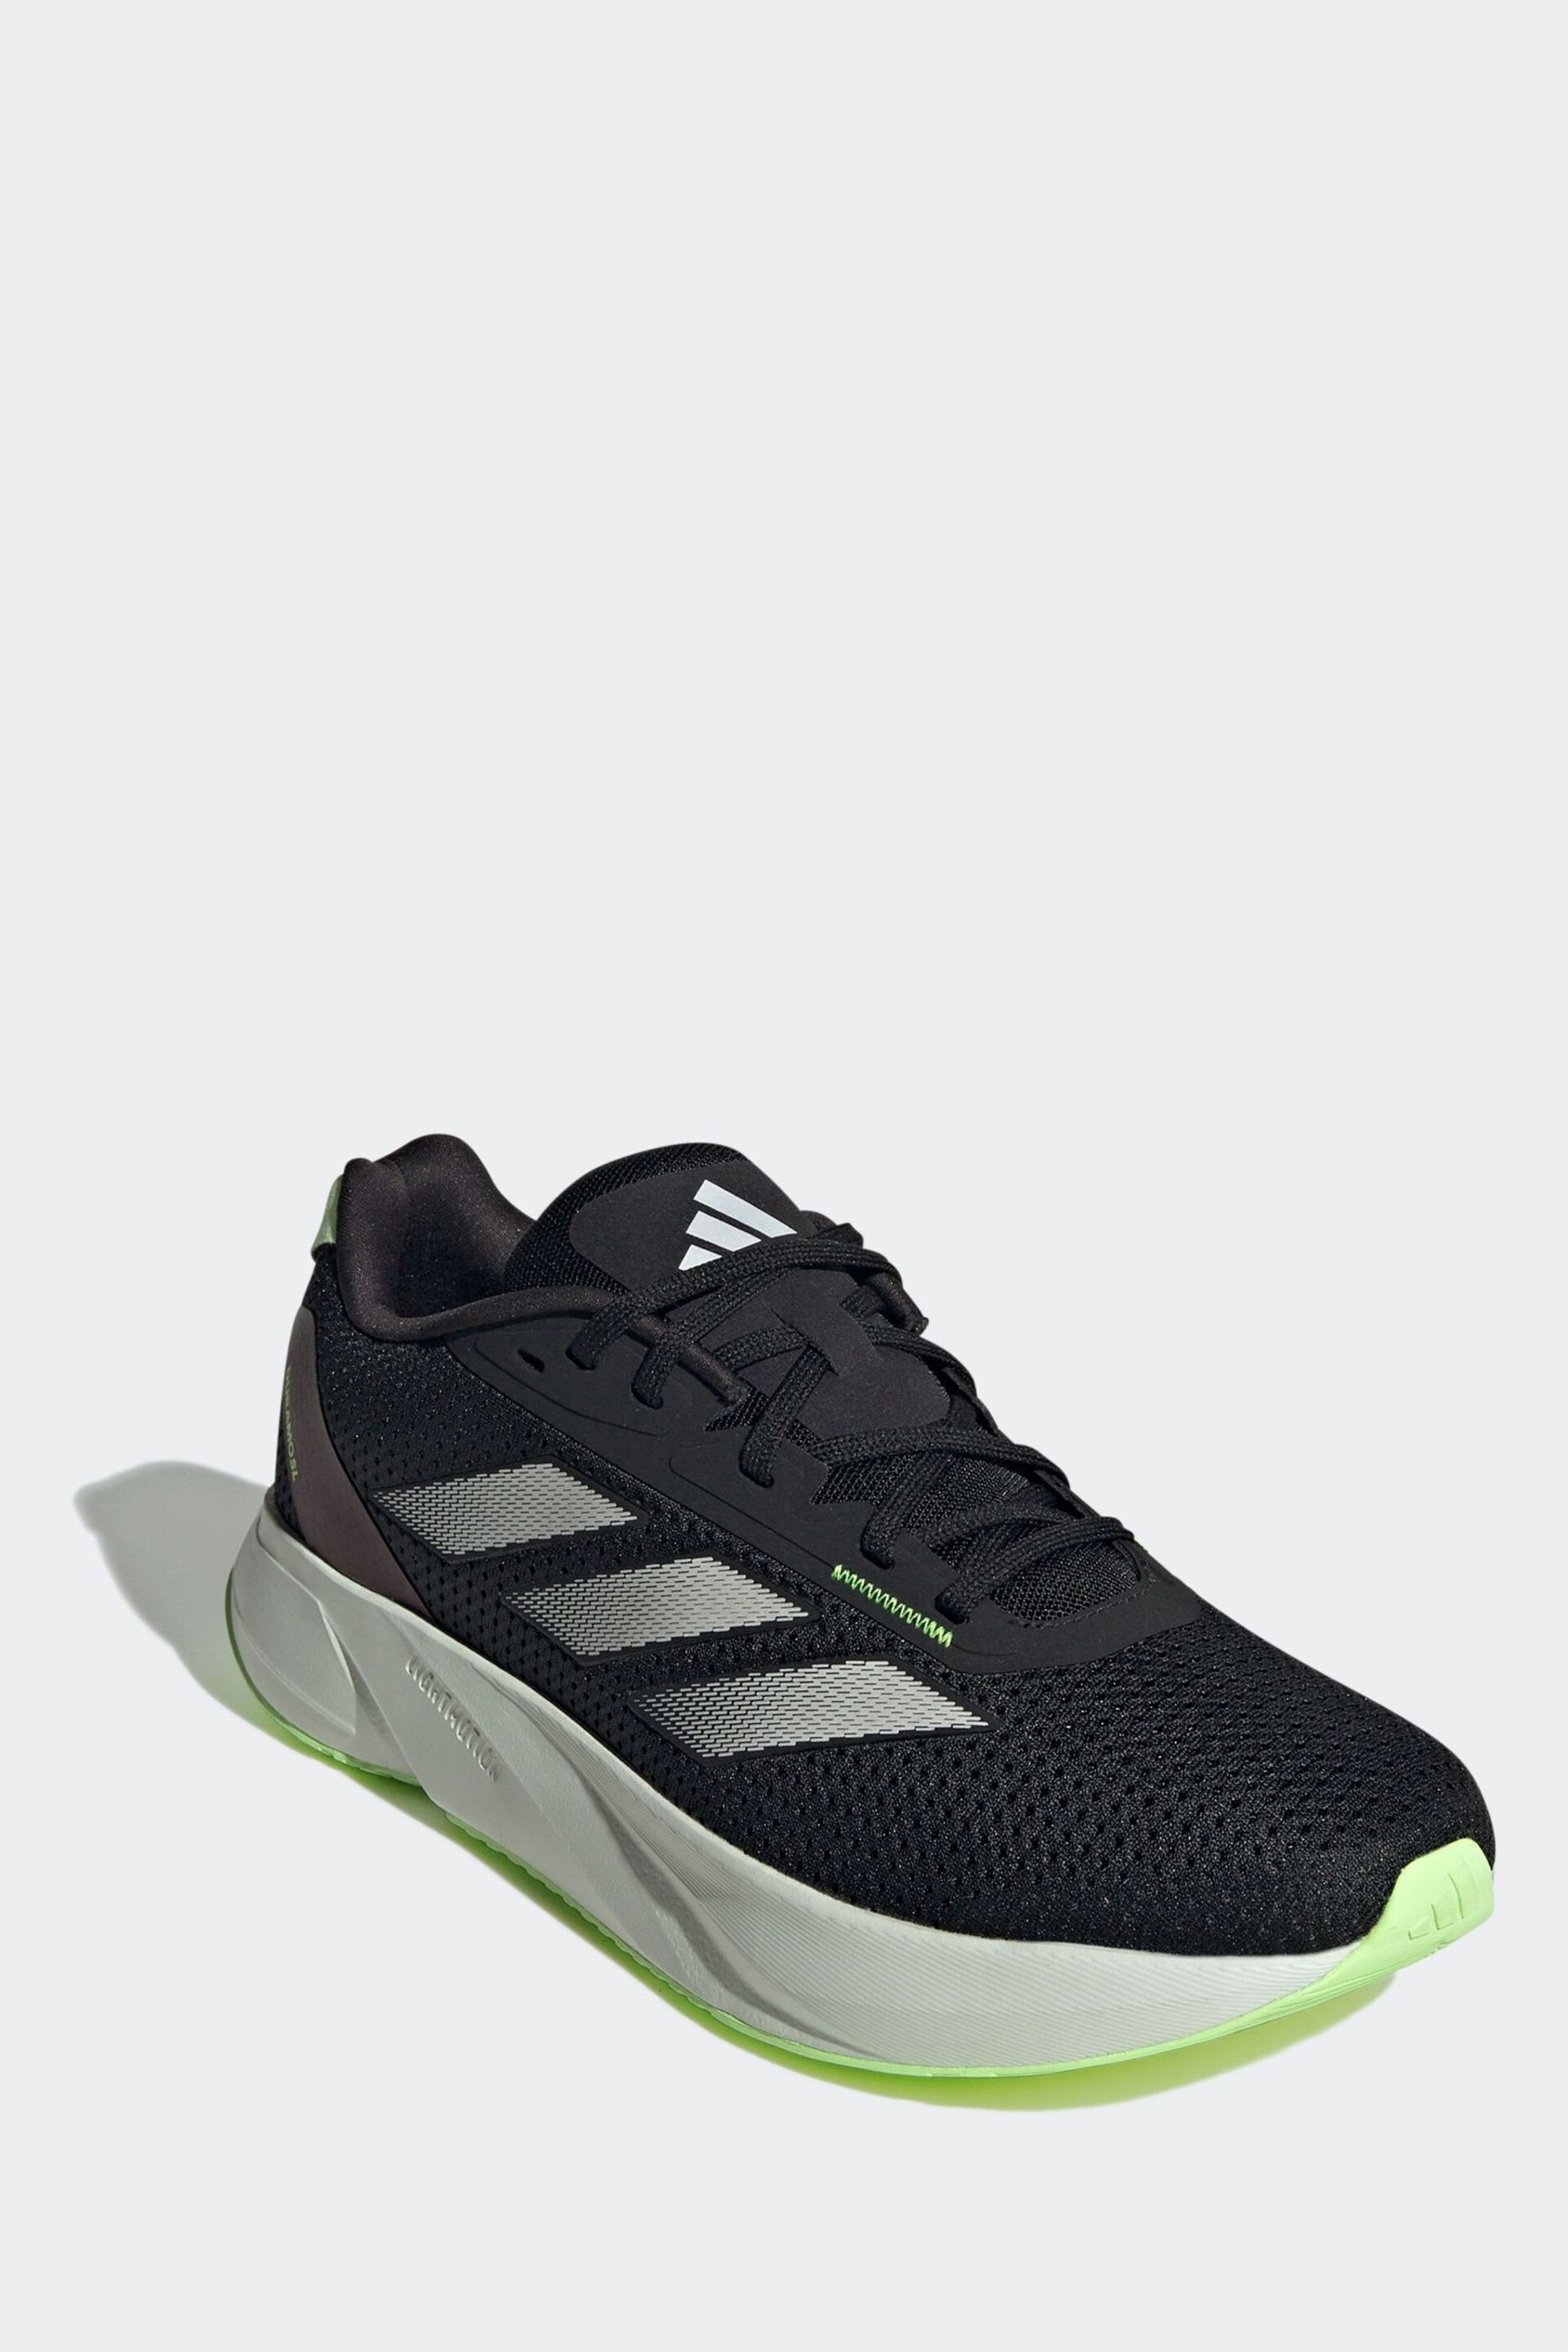 adidas Black/Yellow Duramo SL Trainers - Image 3 of 8